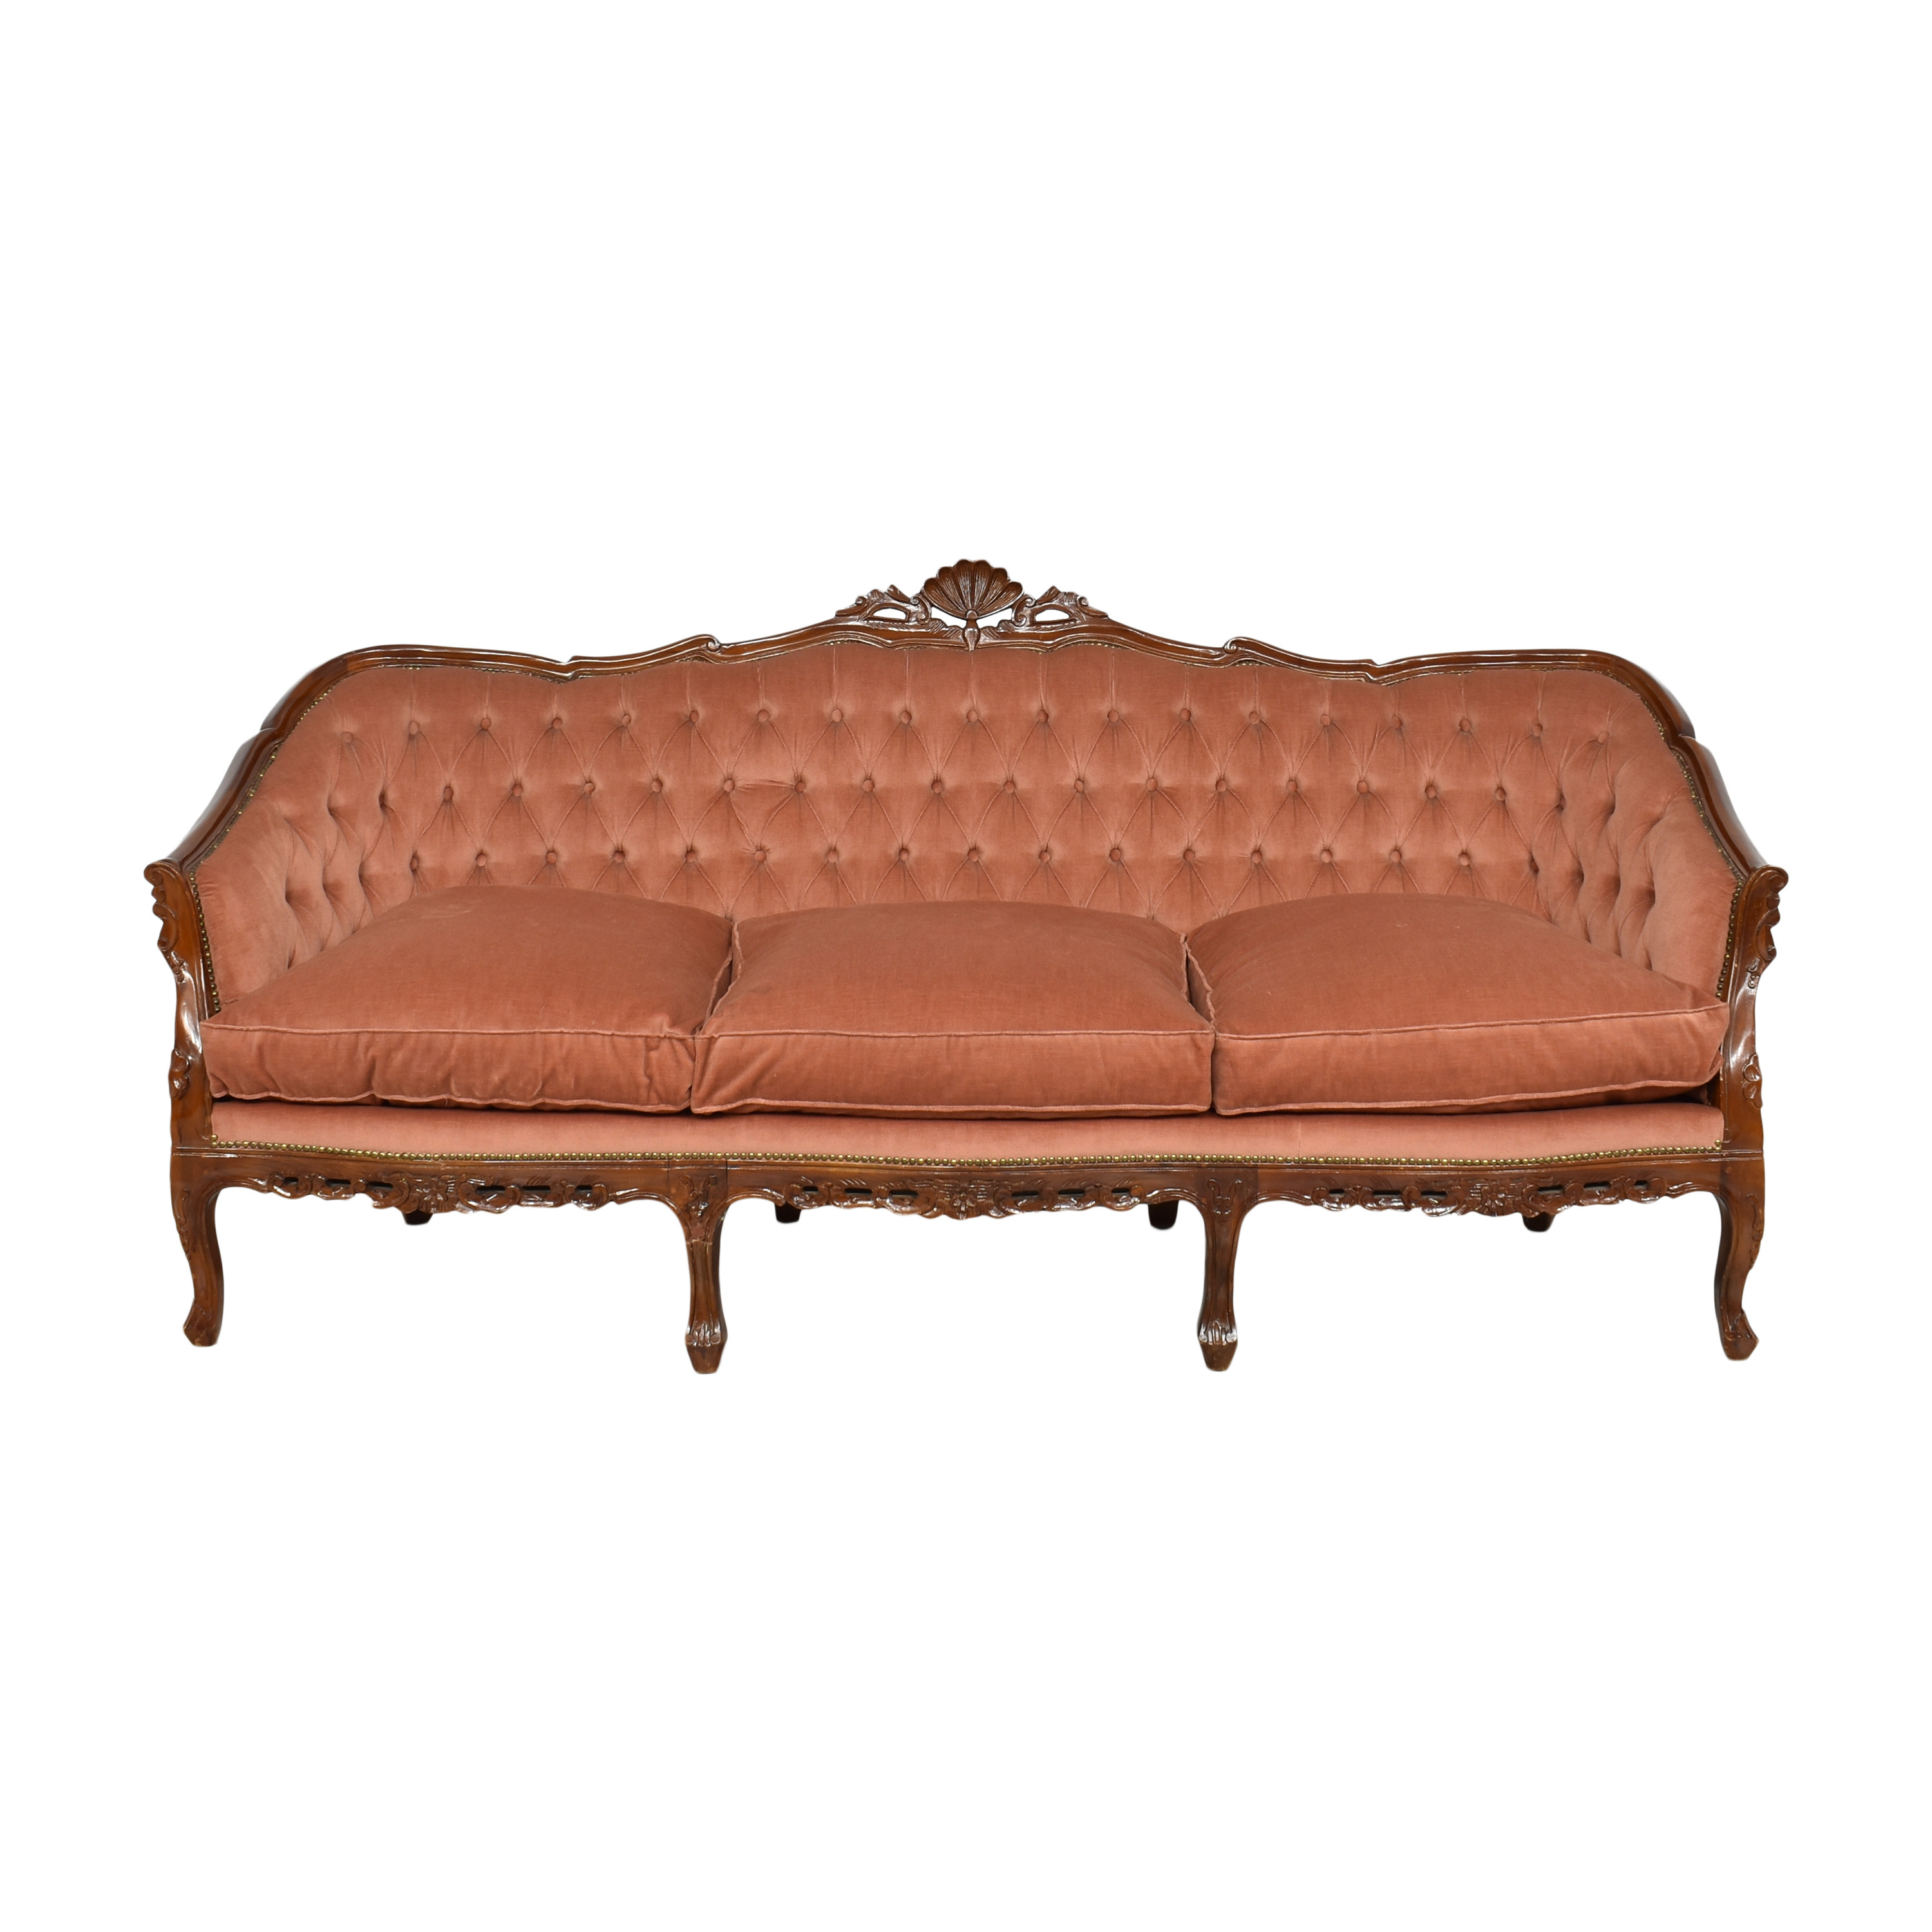 Vintage French Tufted Three Cushion Sofa, 73% Off